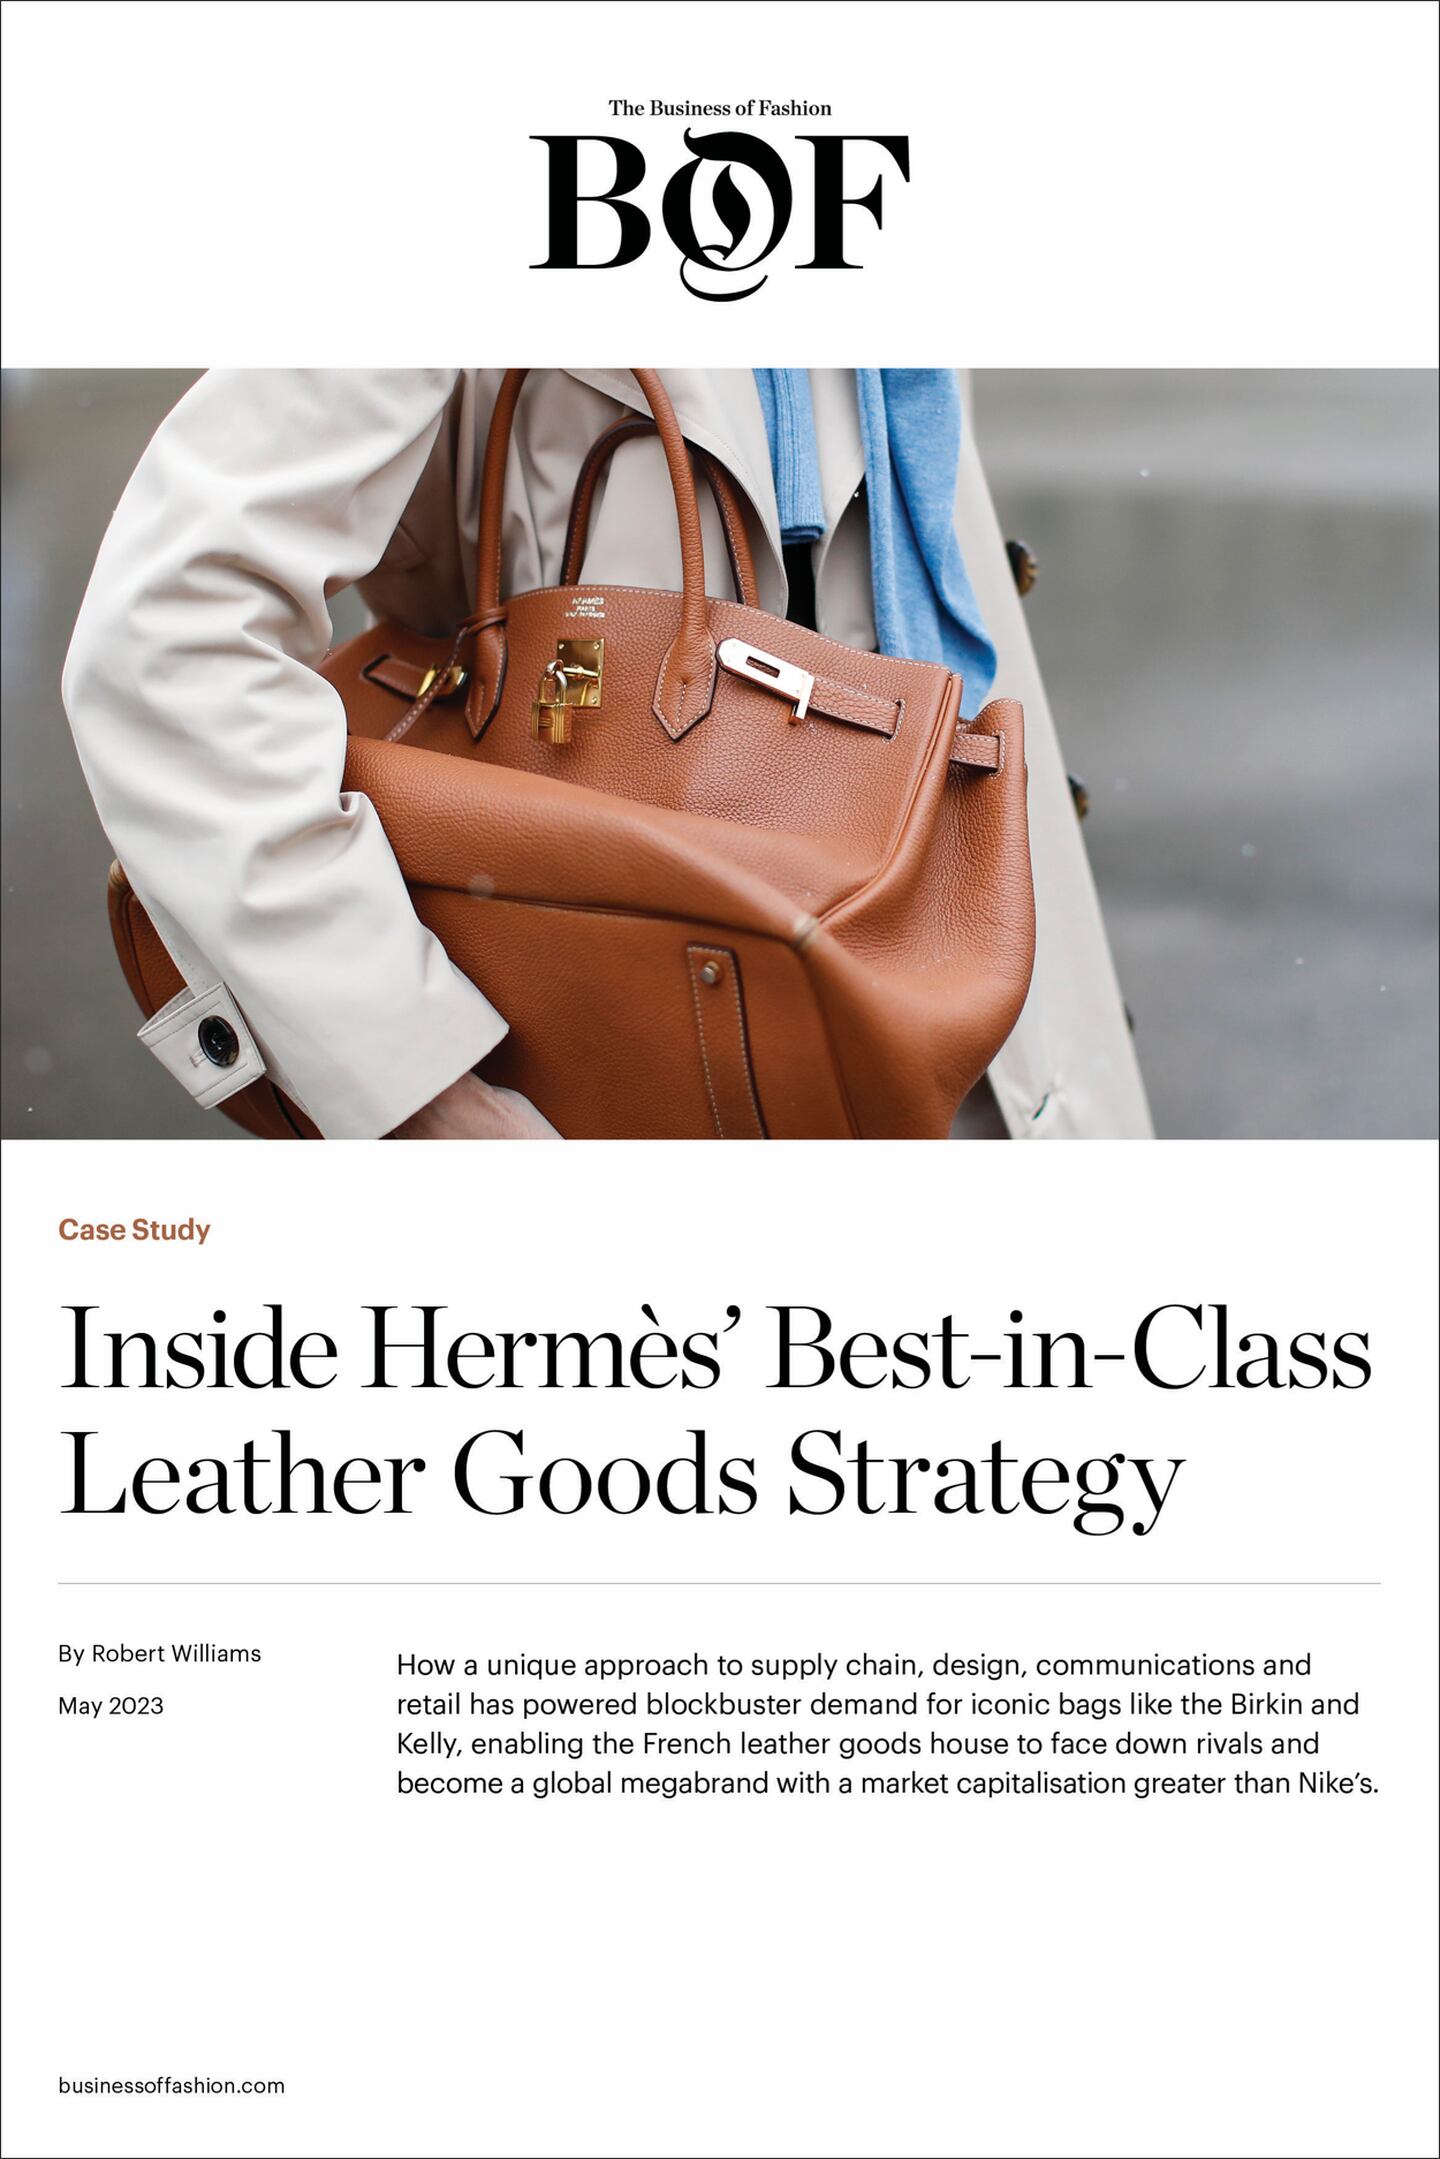 Hermès case study.